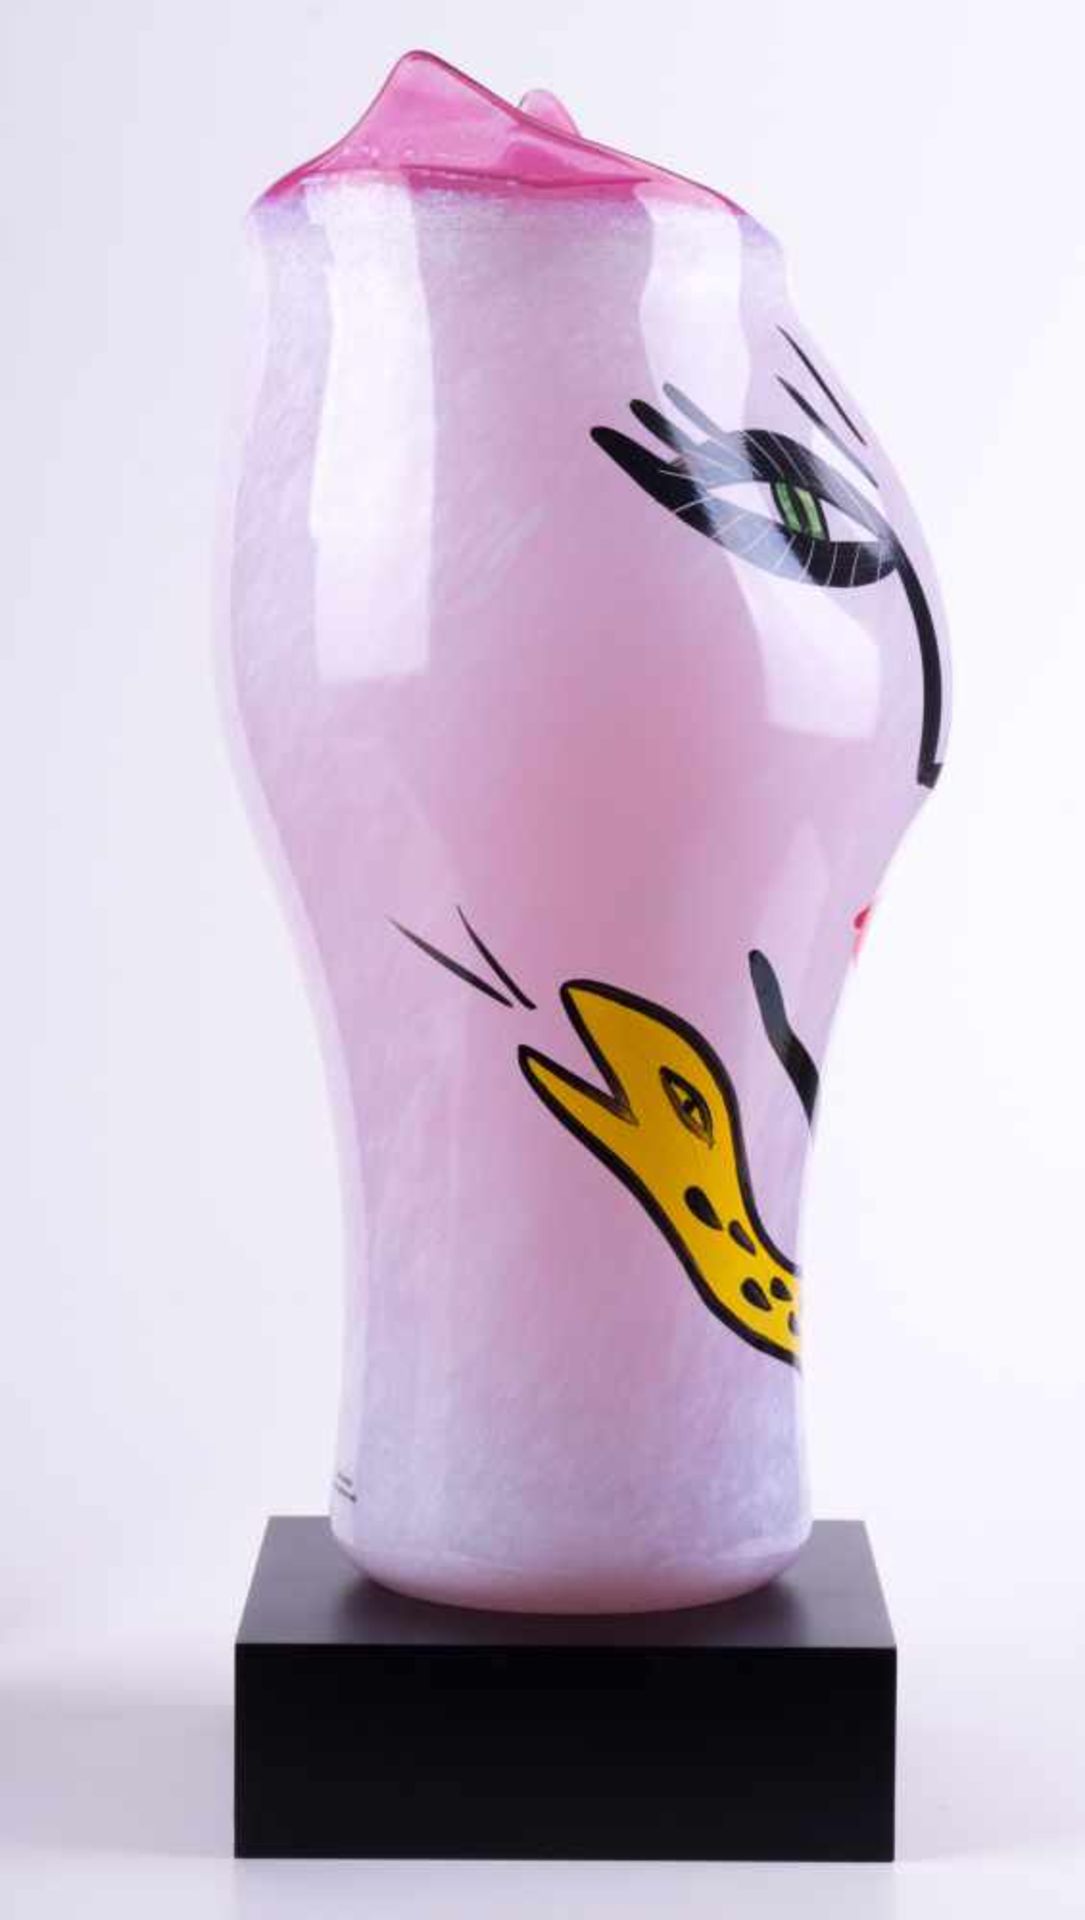 Kosta Boda OPEN MINDS Vase Ulrica Hydman-Vallien rosa, farbig staffiert, signiert, H: 36 cm, Kosta - Image 2 of 5